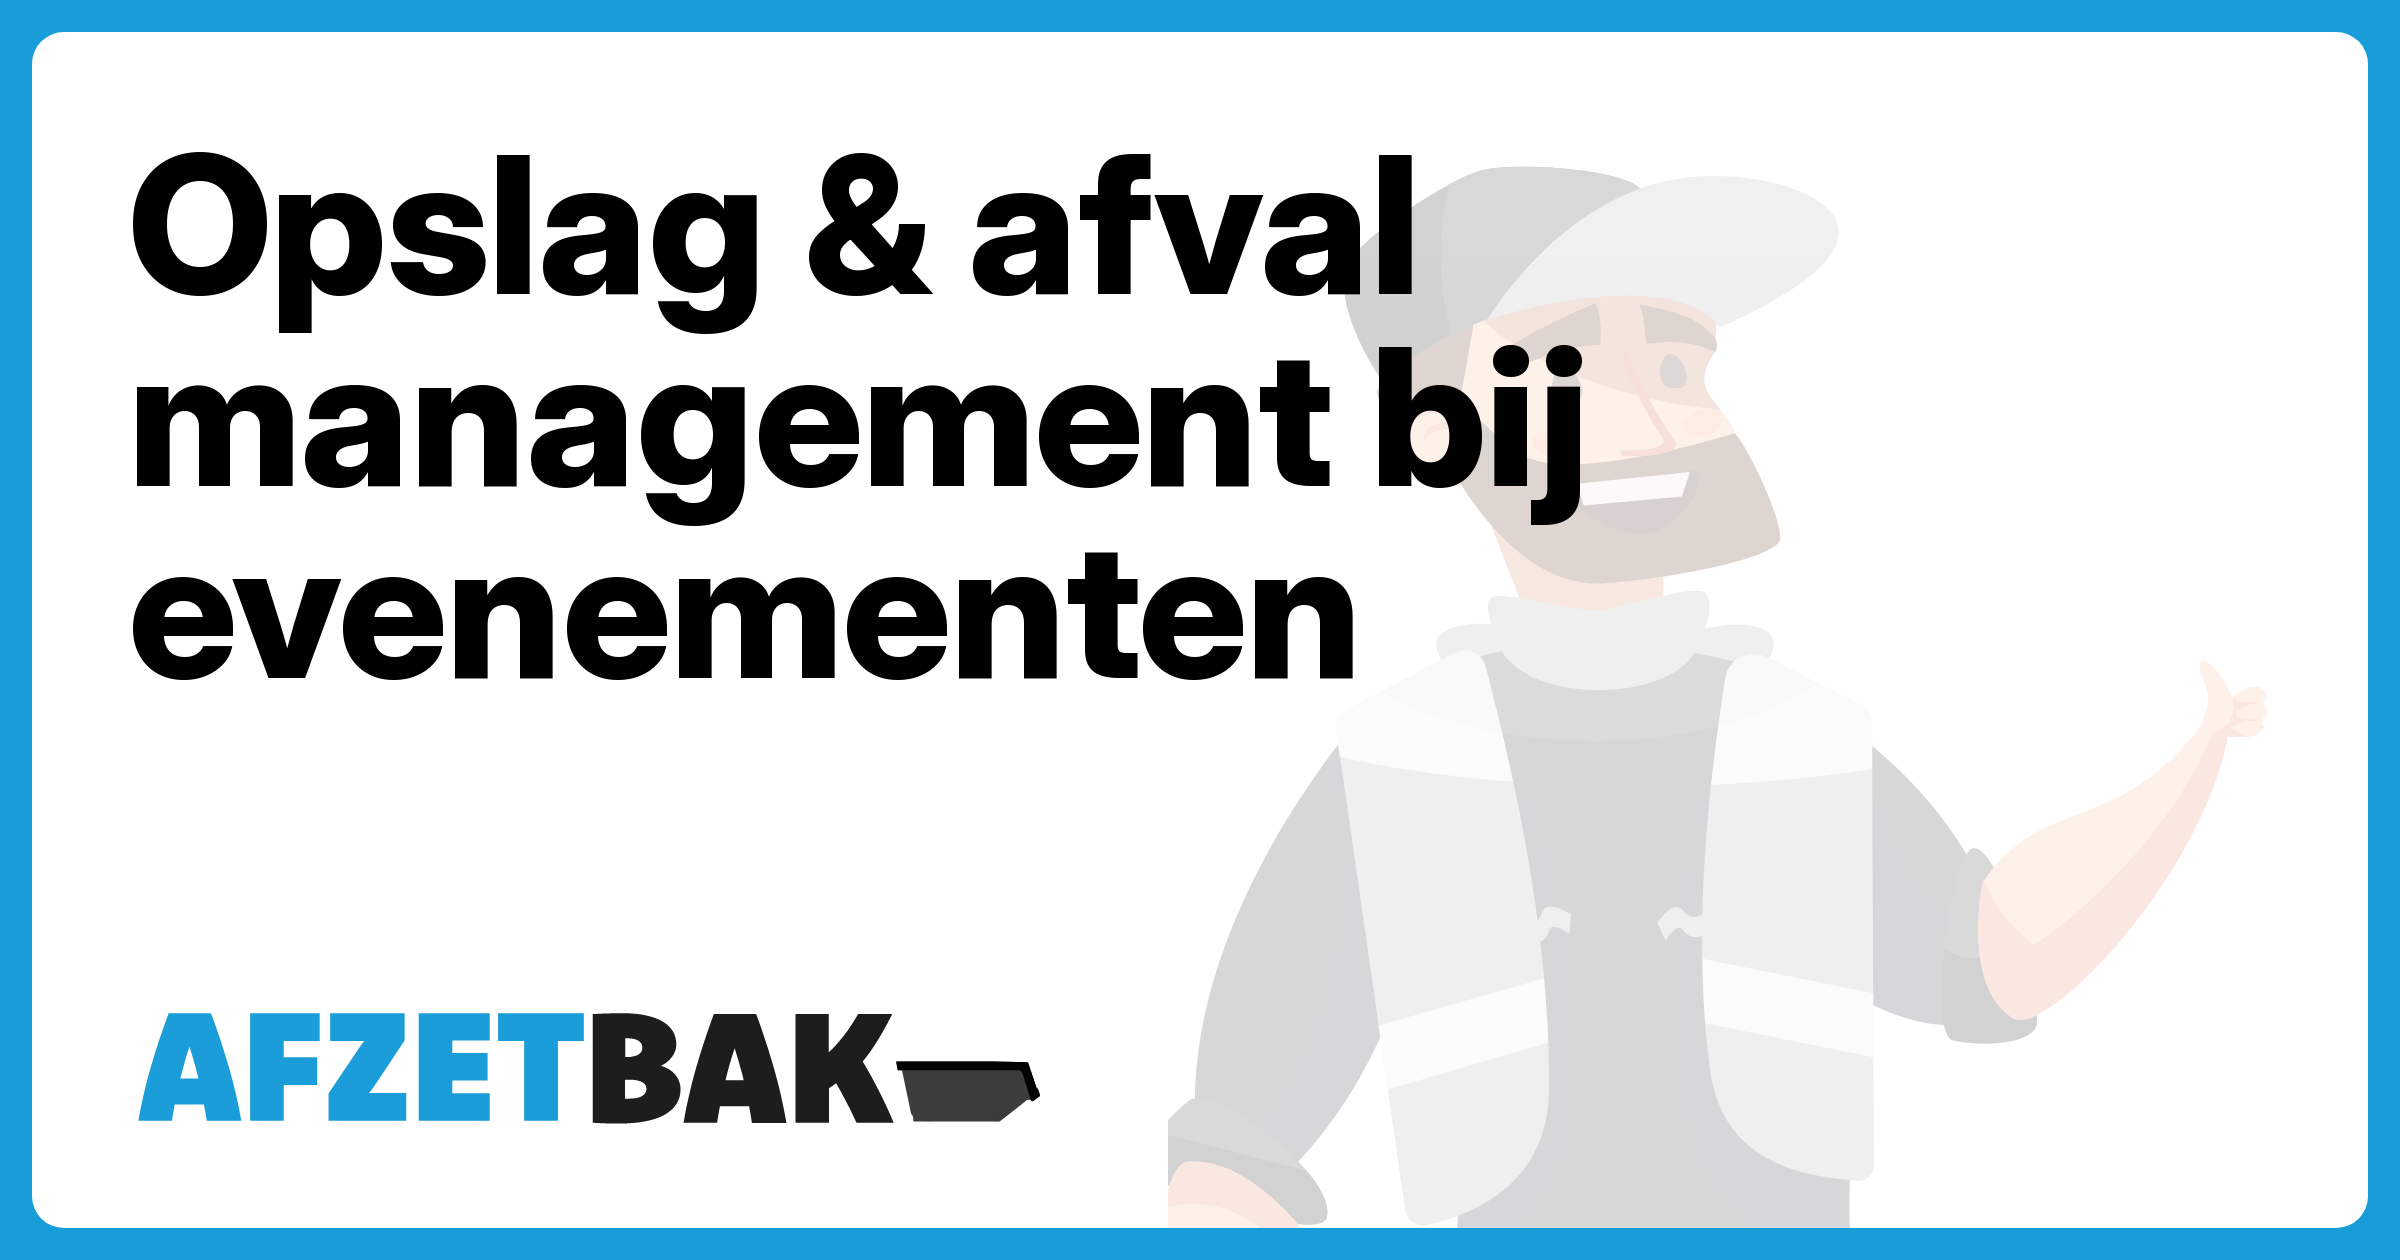 Opslag & afval management bij evenementen - Afzetbak.nl